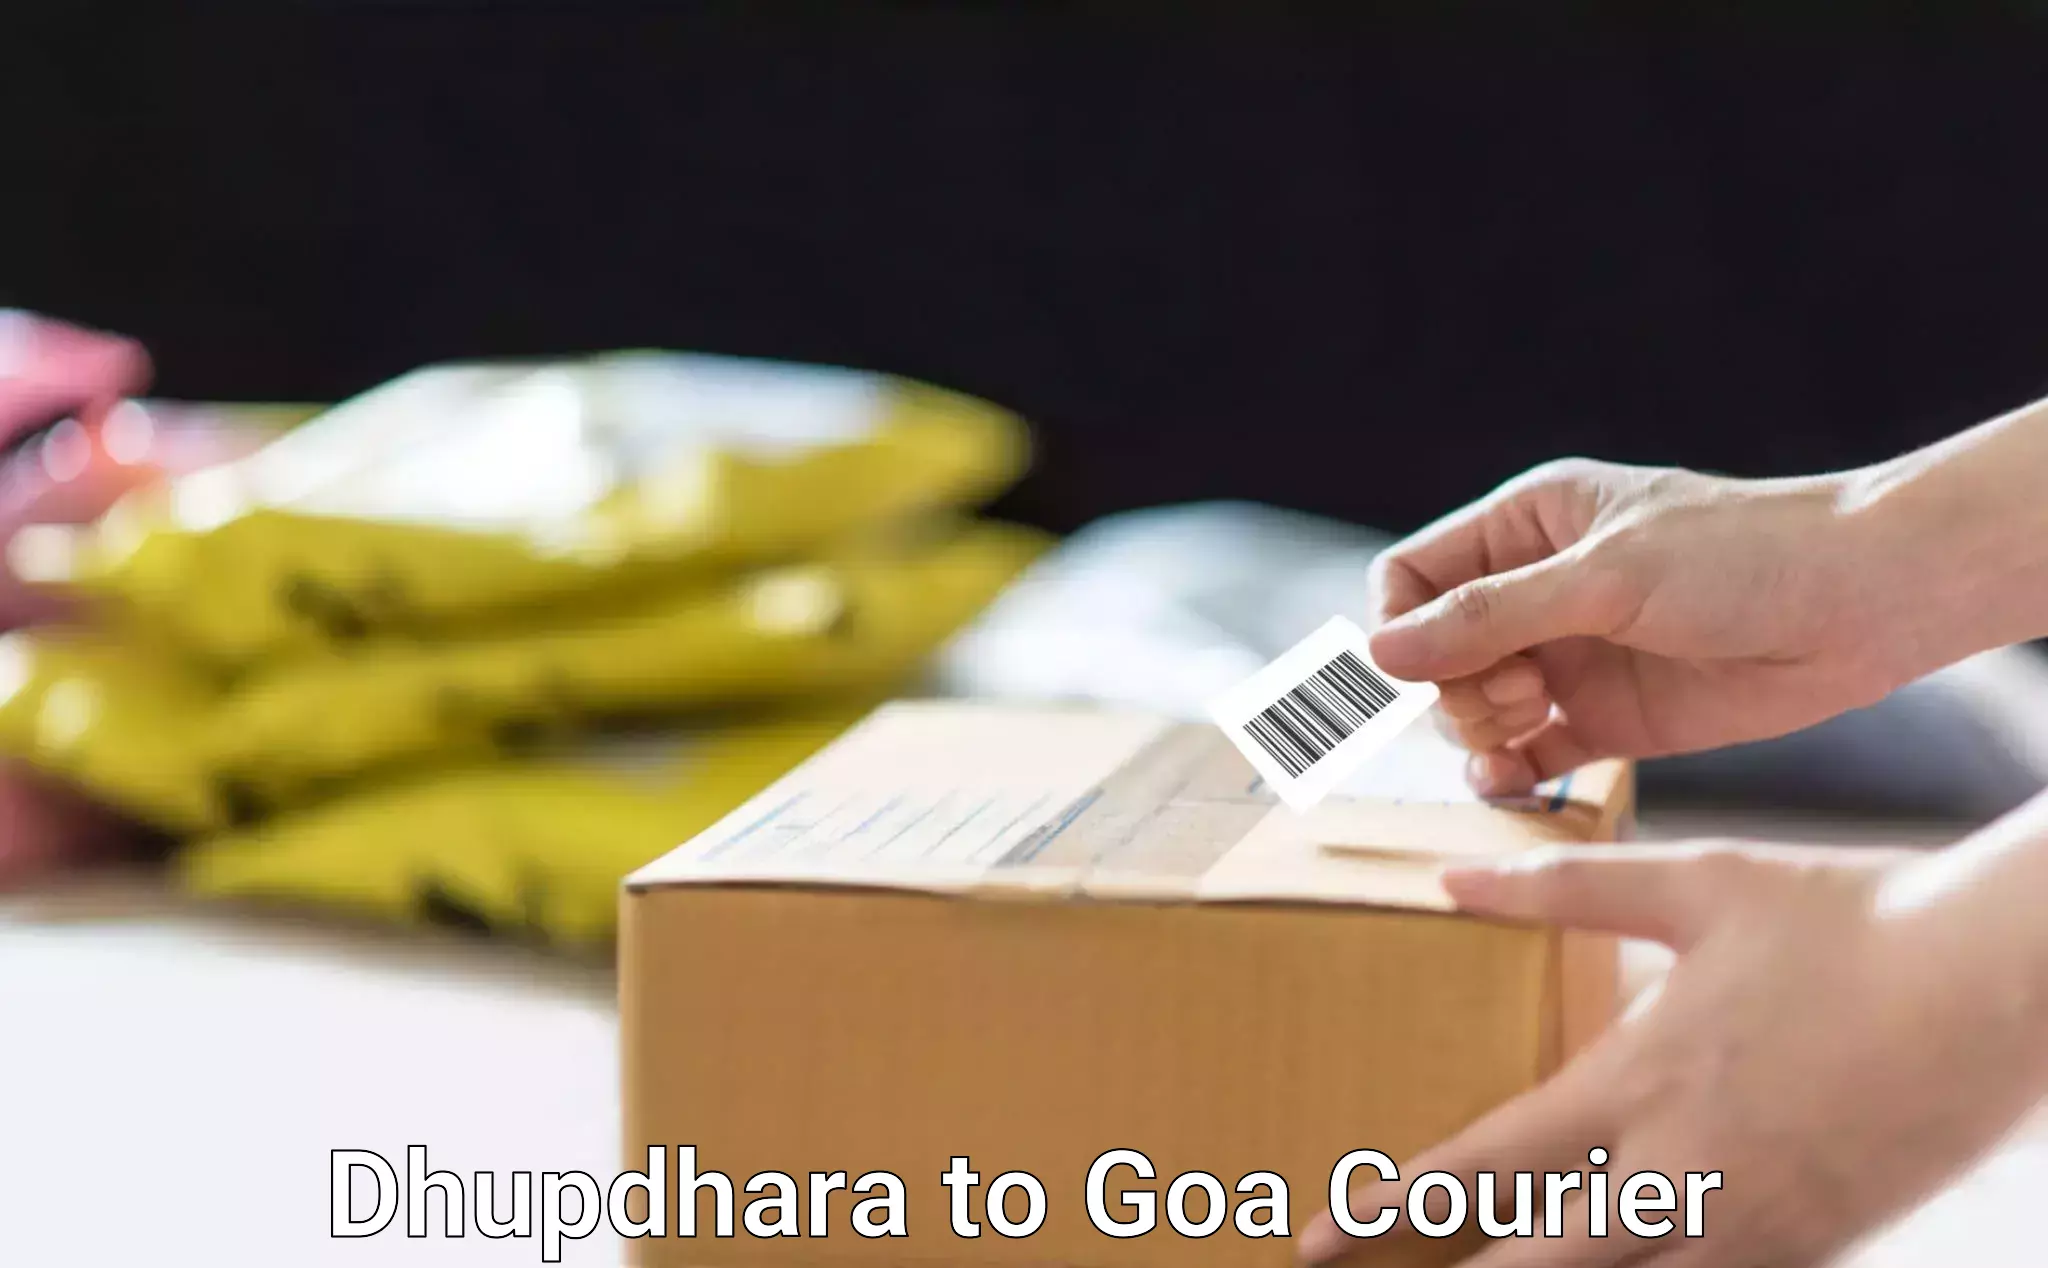 Bulk courier orders Dhupdhara to South Goa